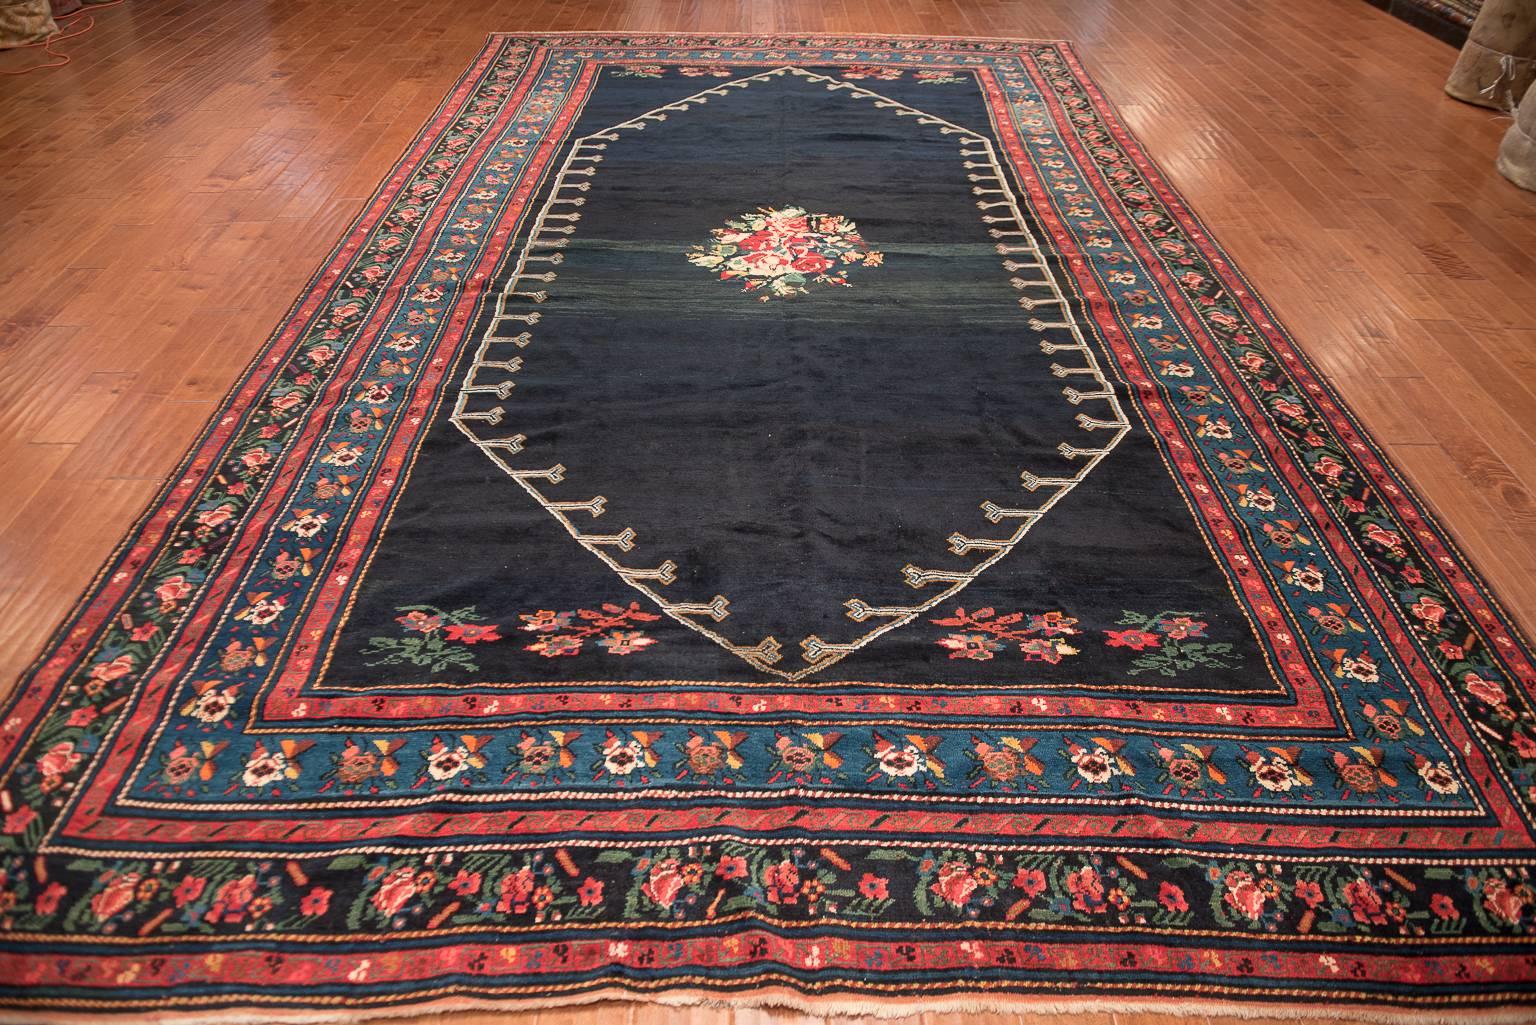 Regal Blue Antique Caucasian Karabagh Carpet, circa 1900 In Excellent Condition For Sale In Dallas, TX